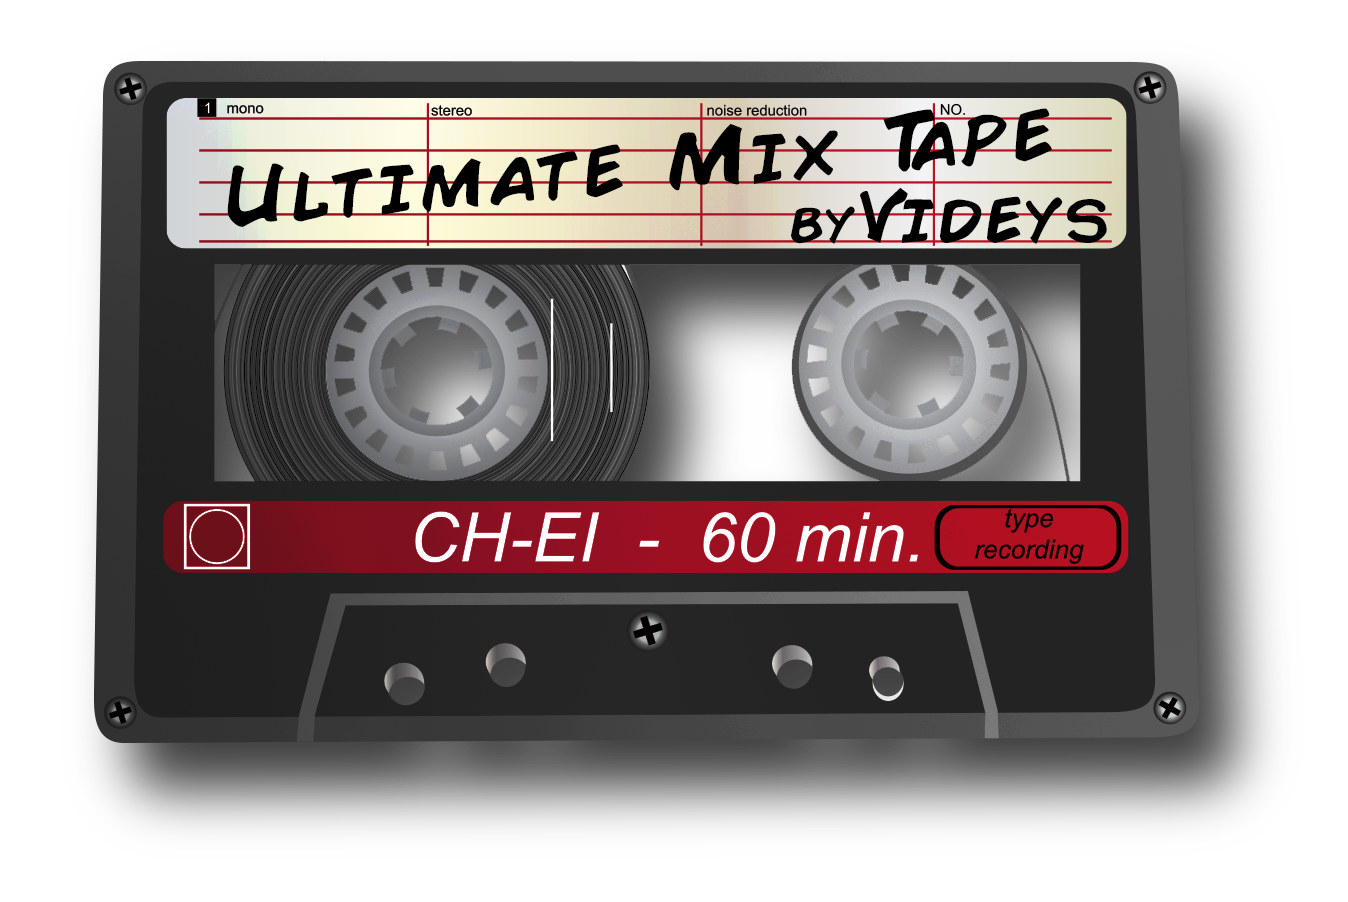 videys mix tape